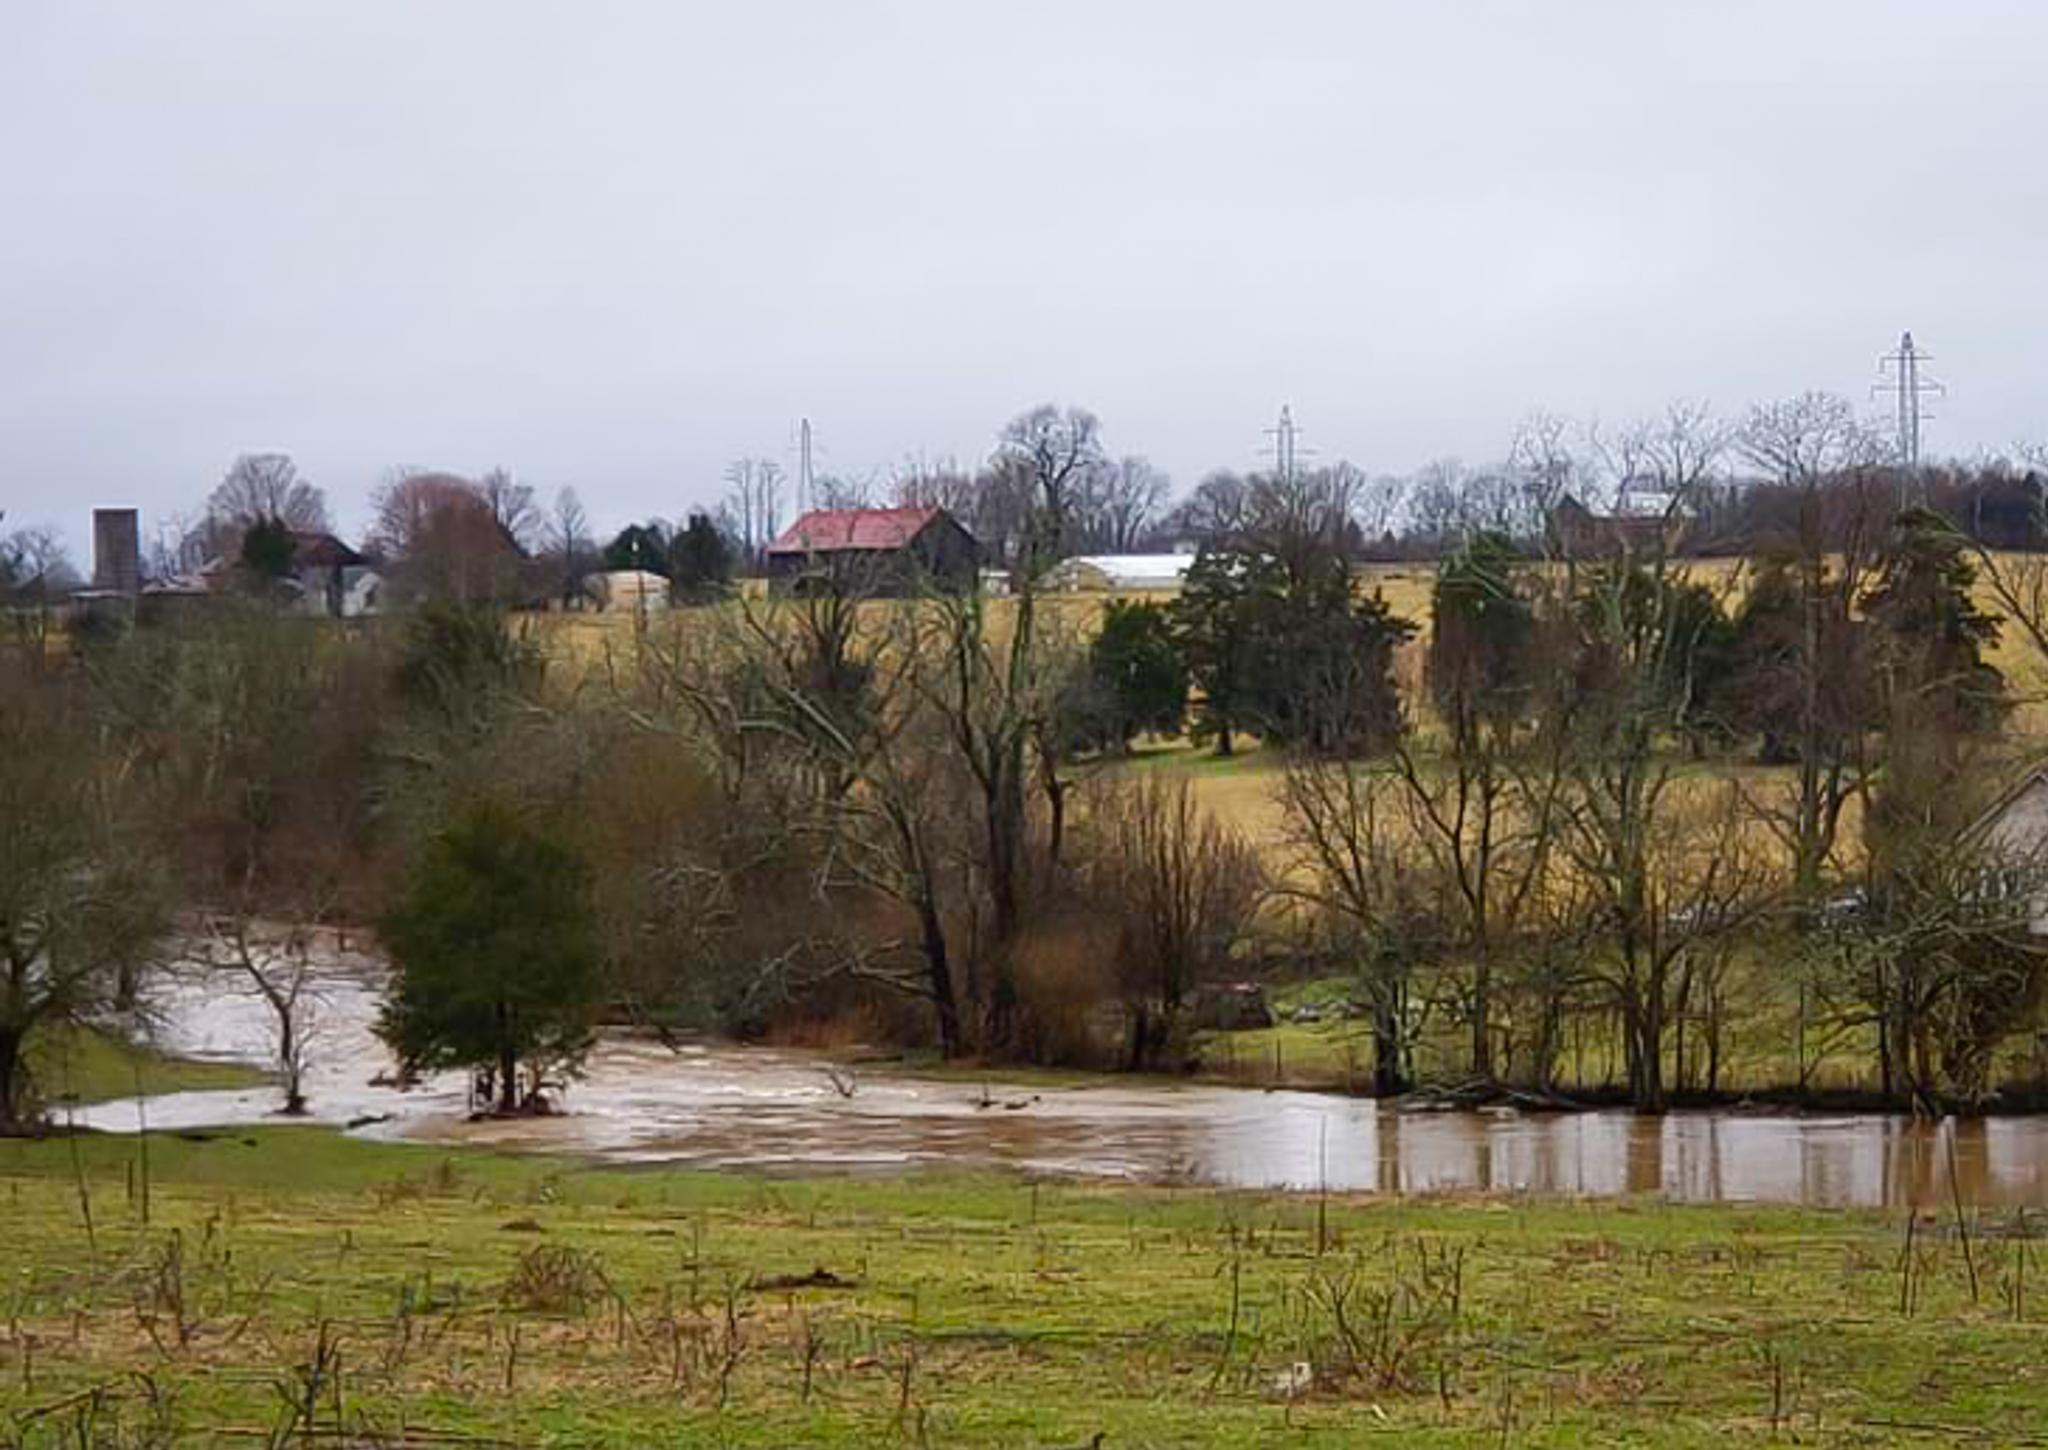 February rains flooding Kentucky pastures